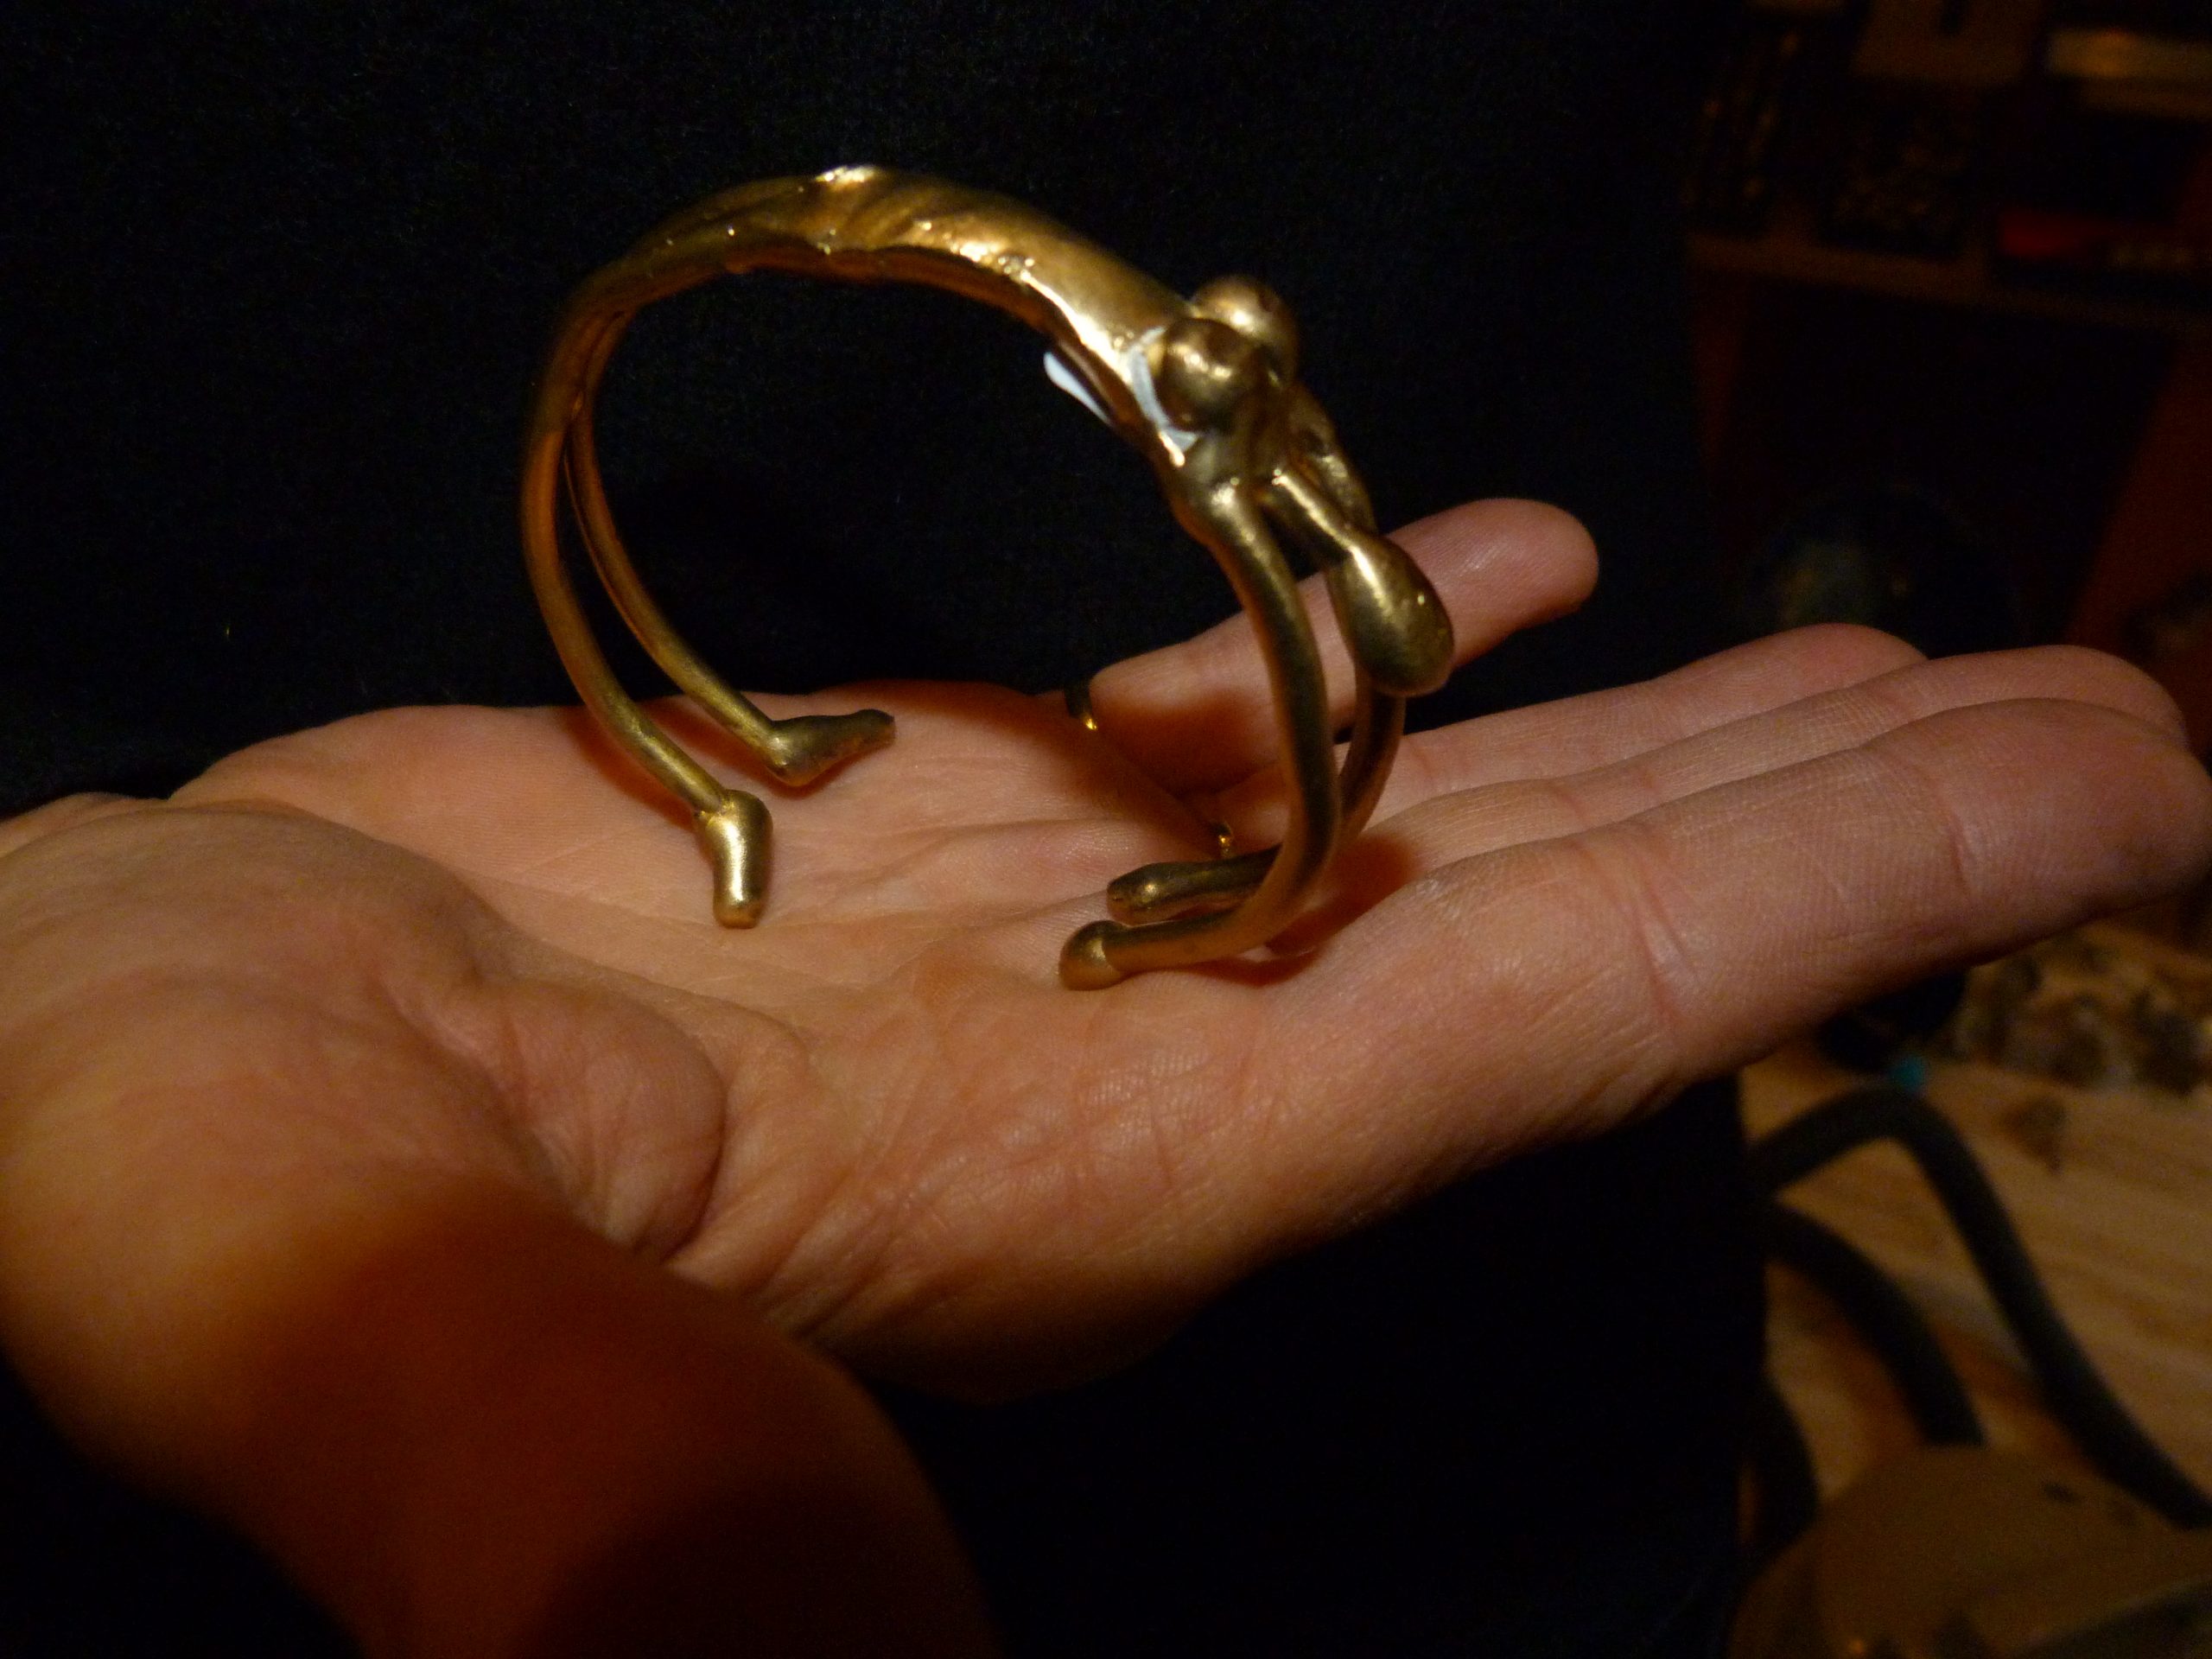 Bracelet "Giacometti"